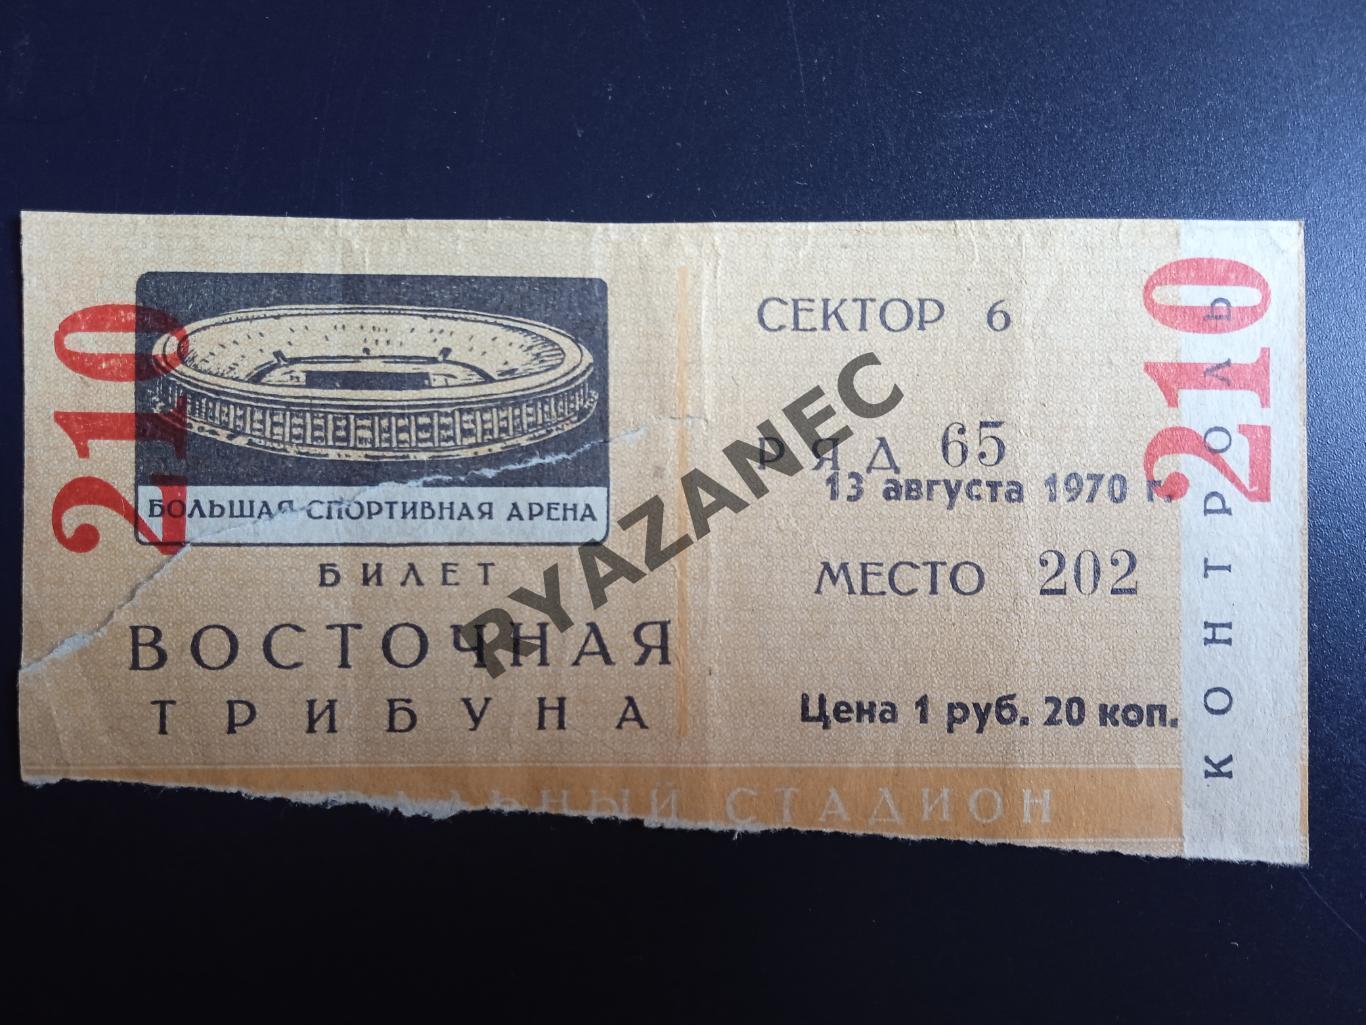 Футбол. Торпедо (Москва) - Пахтакор (Ташкент) - 13.08.1970 - Билет